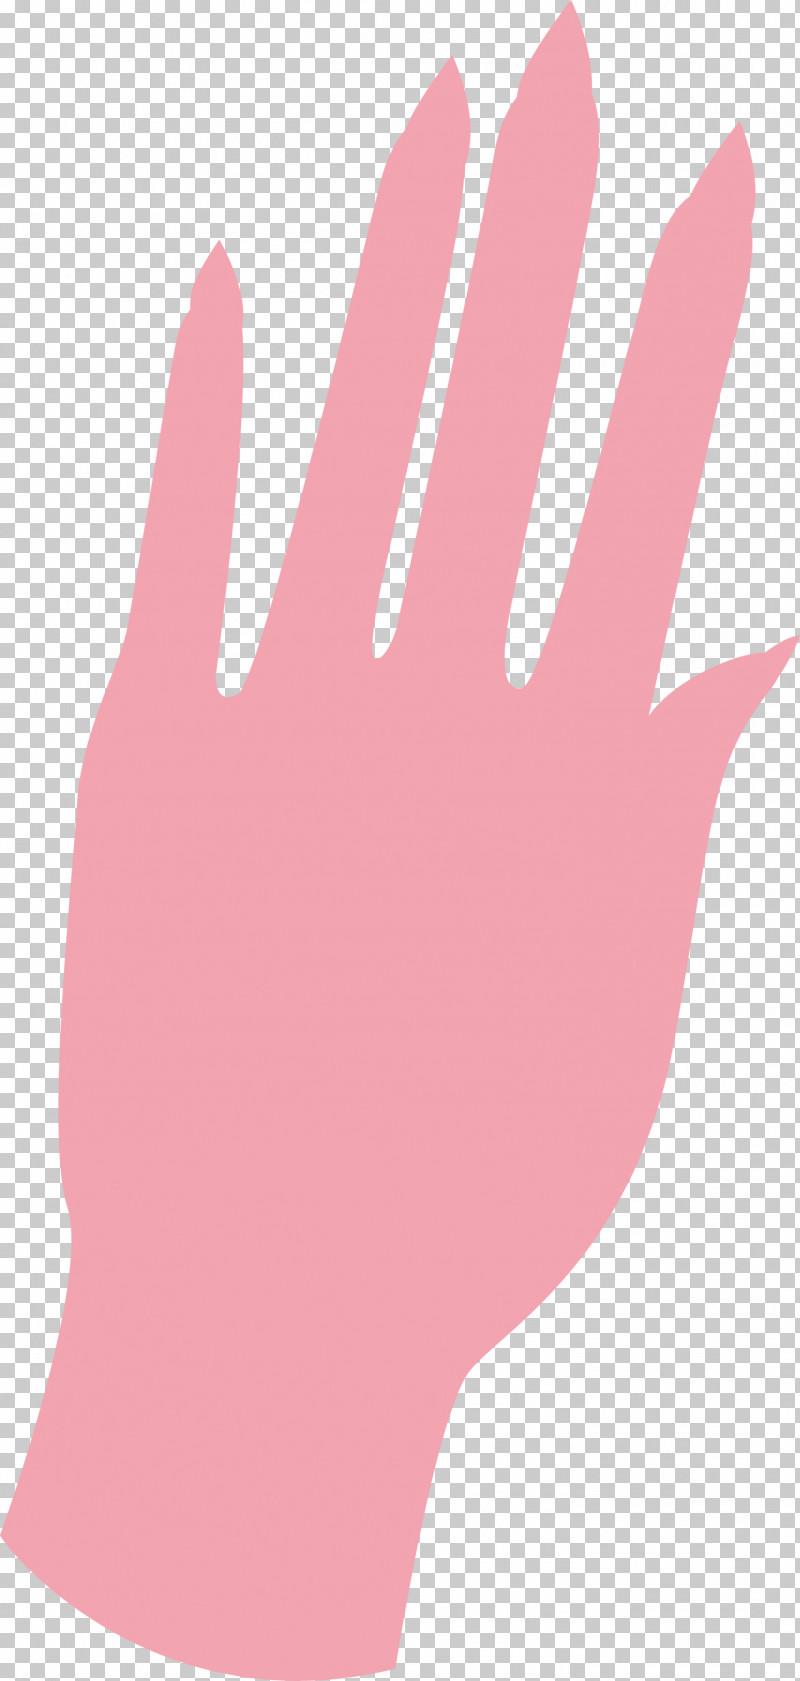 Hand Model Safety Glove Pink M Line Meter PNG, Clipart, Glove, Hand, Hand Model, Line, Meter Free PNG Download